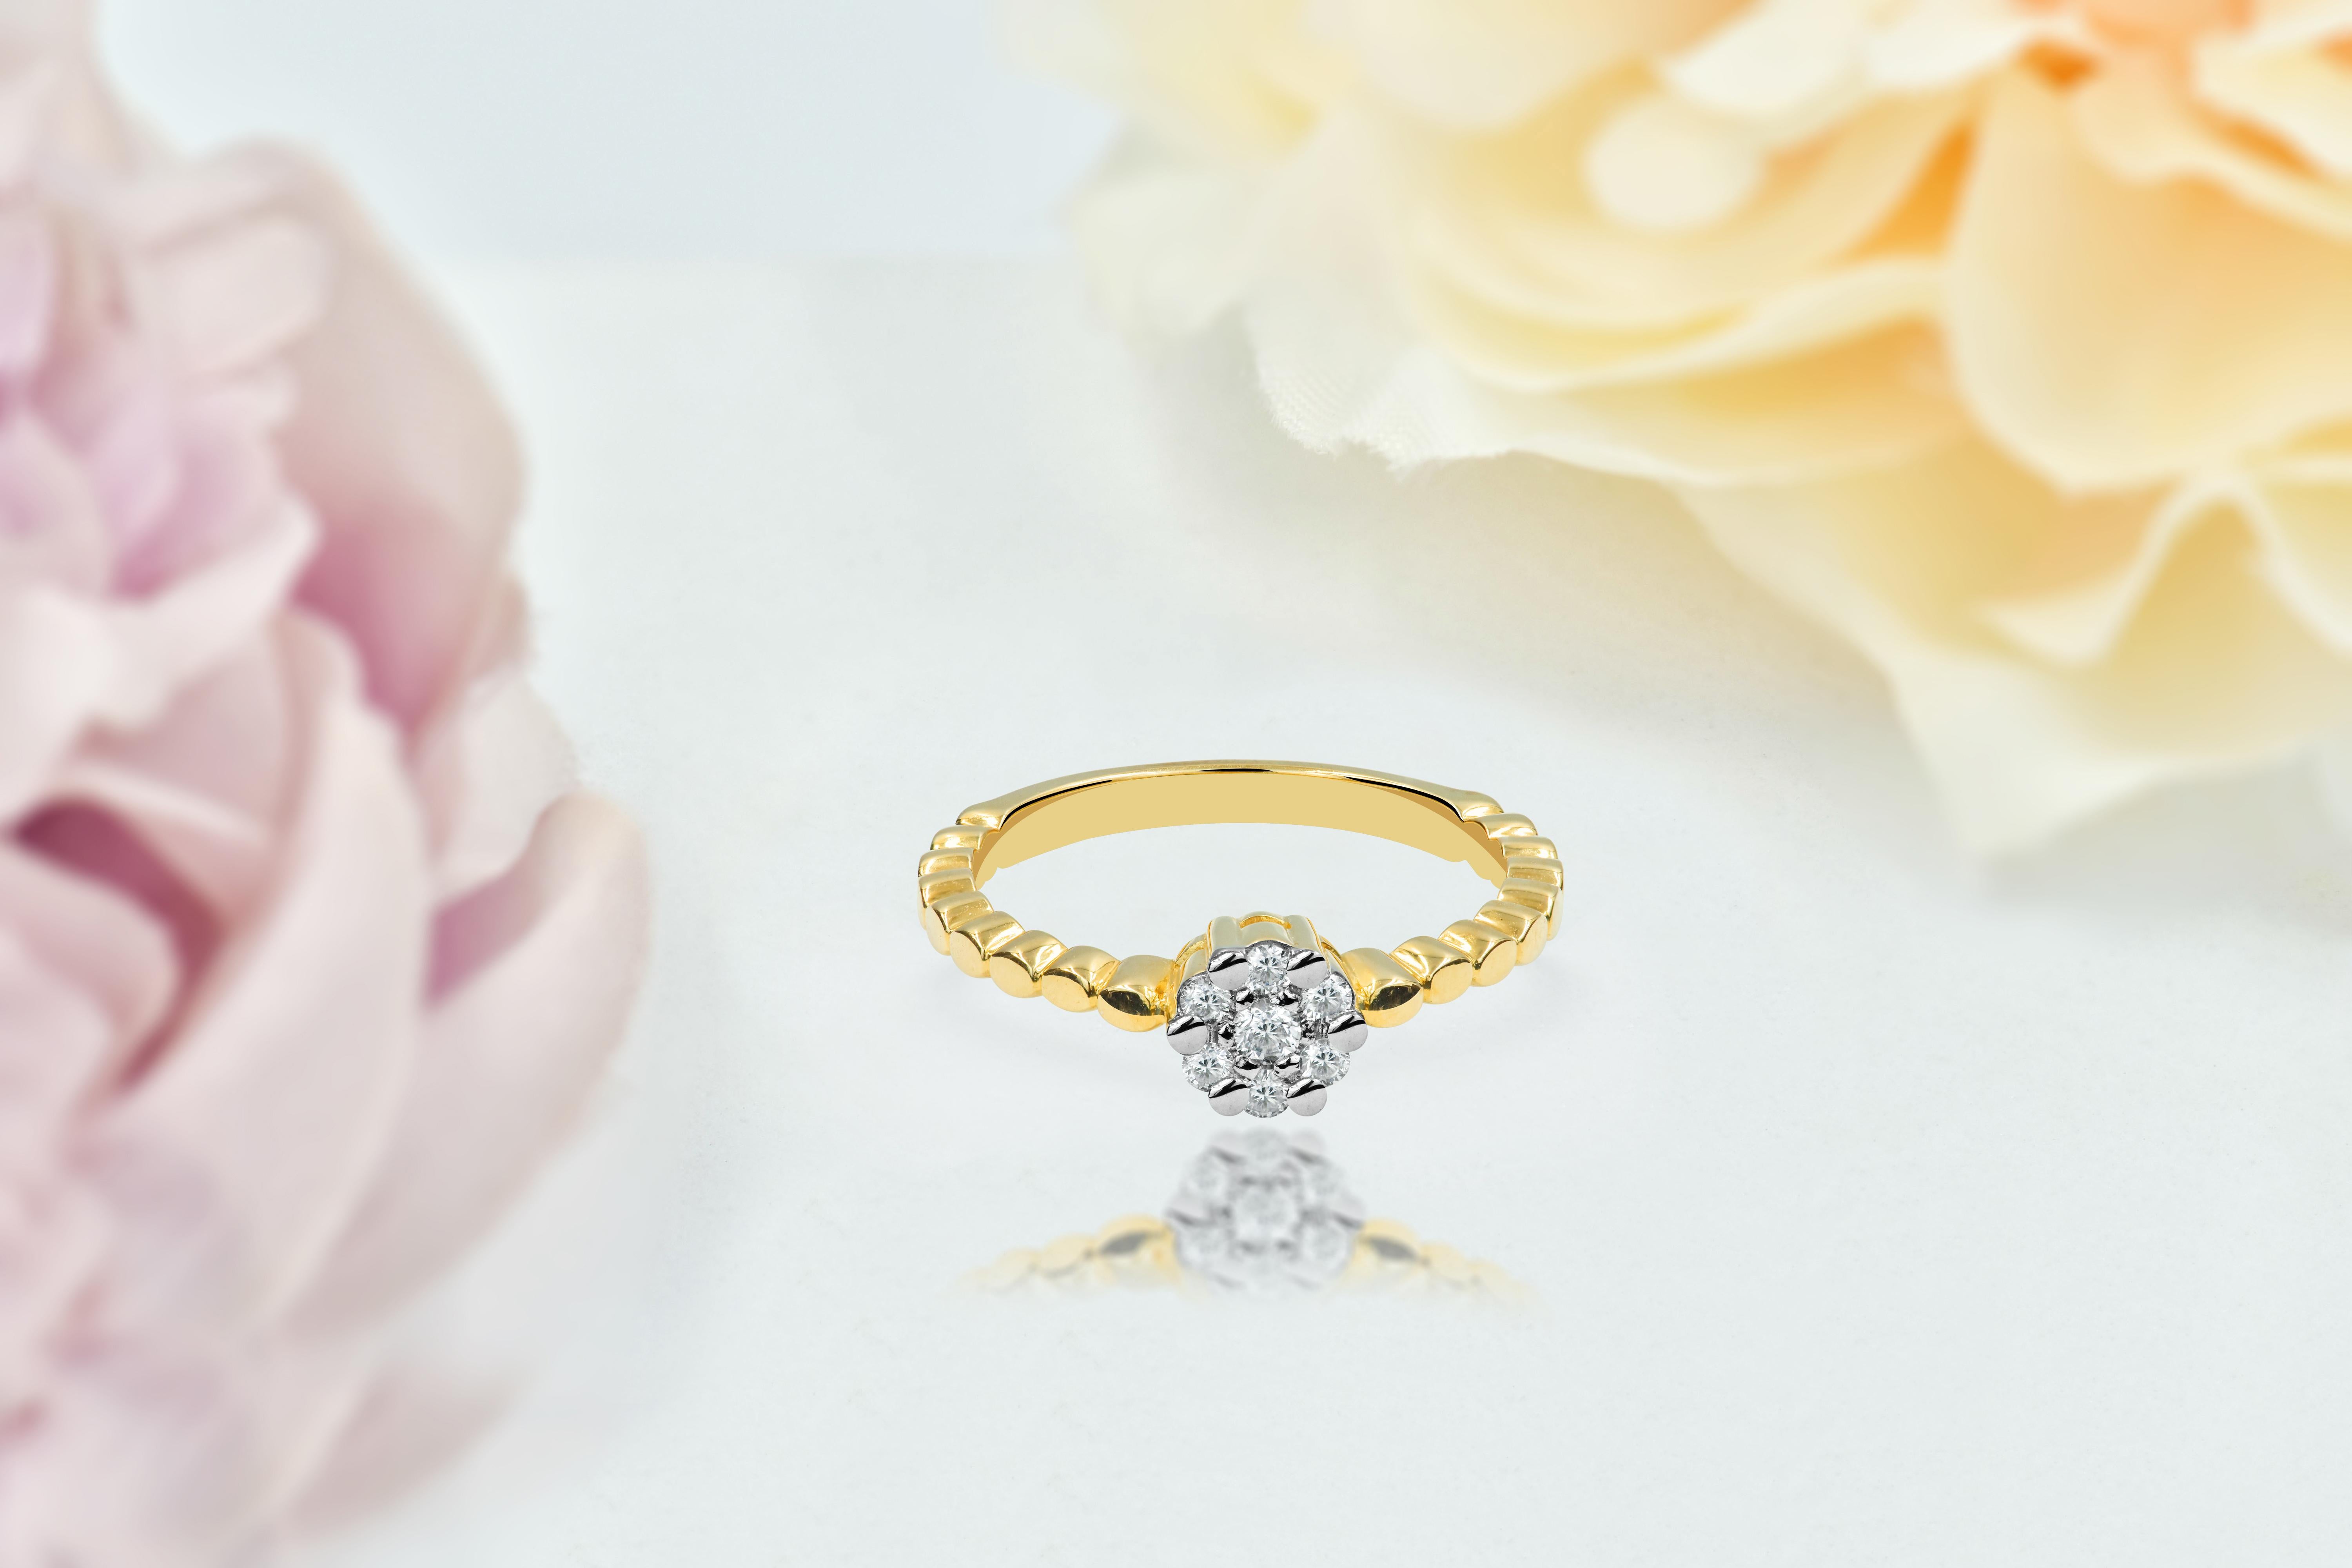 For Sale:  18k Gold Diamond Ring Delicate Engagement Ring Diamond Wedding Ring 5